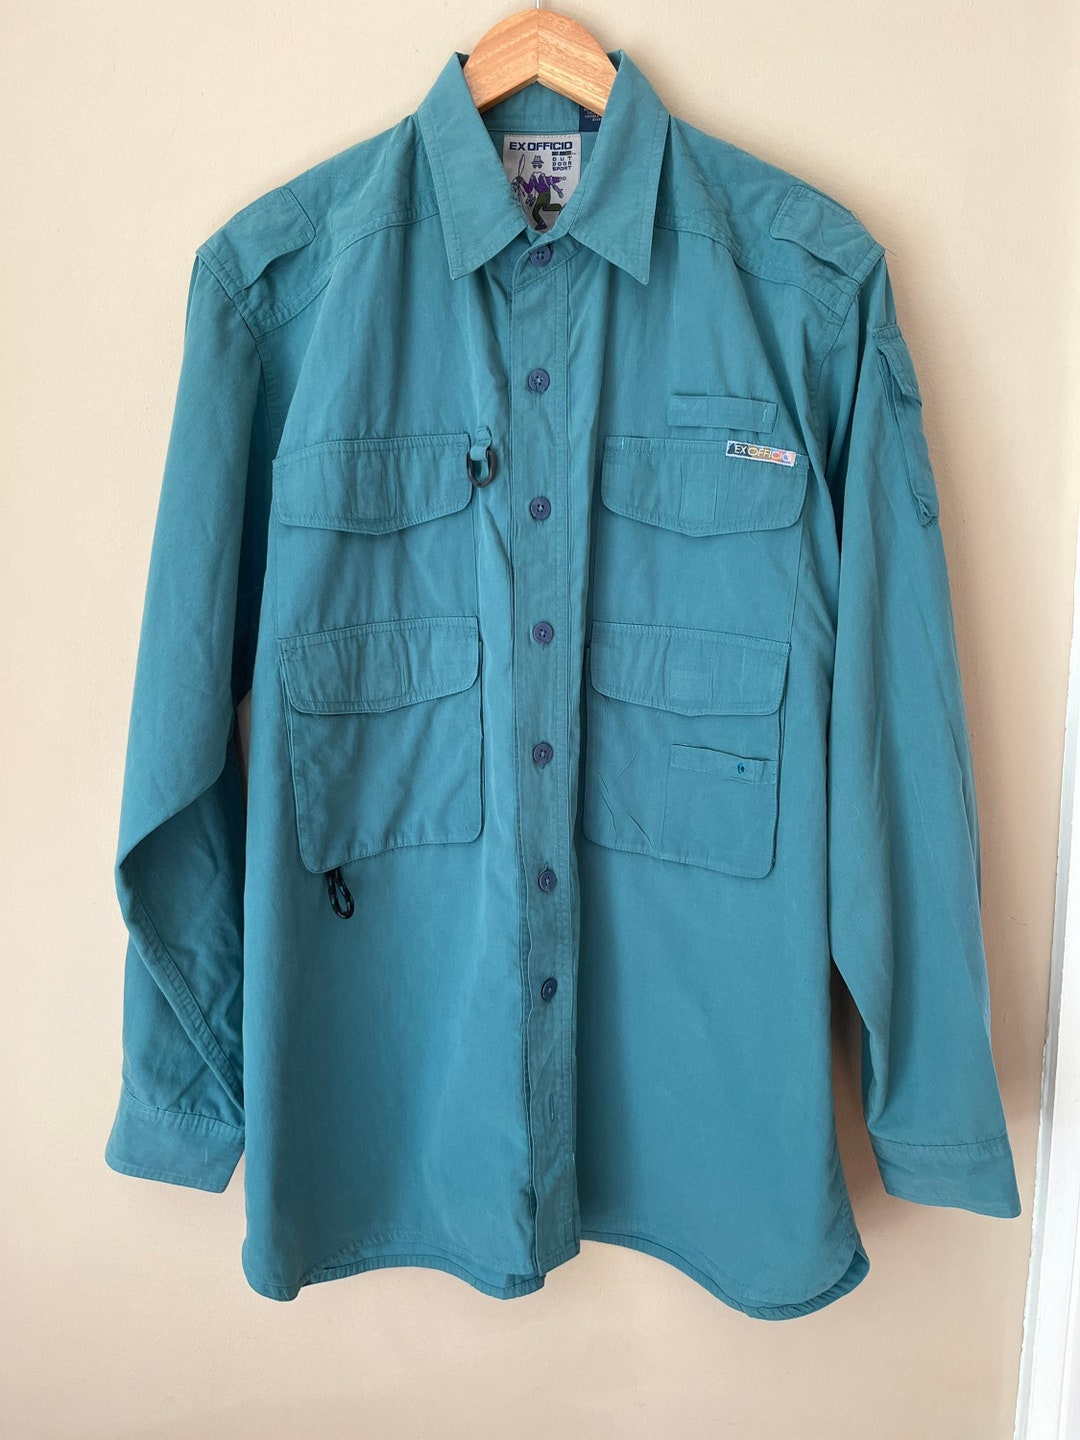 Mens Large Aqua Blue Fishing Shirt Long Sleeve Vintage 60/40